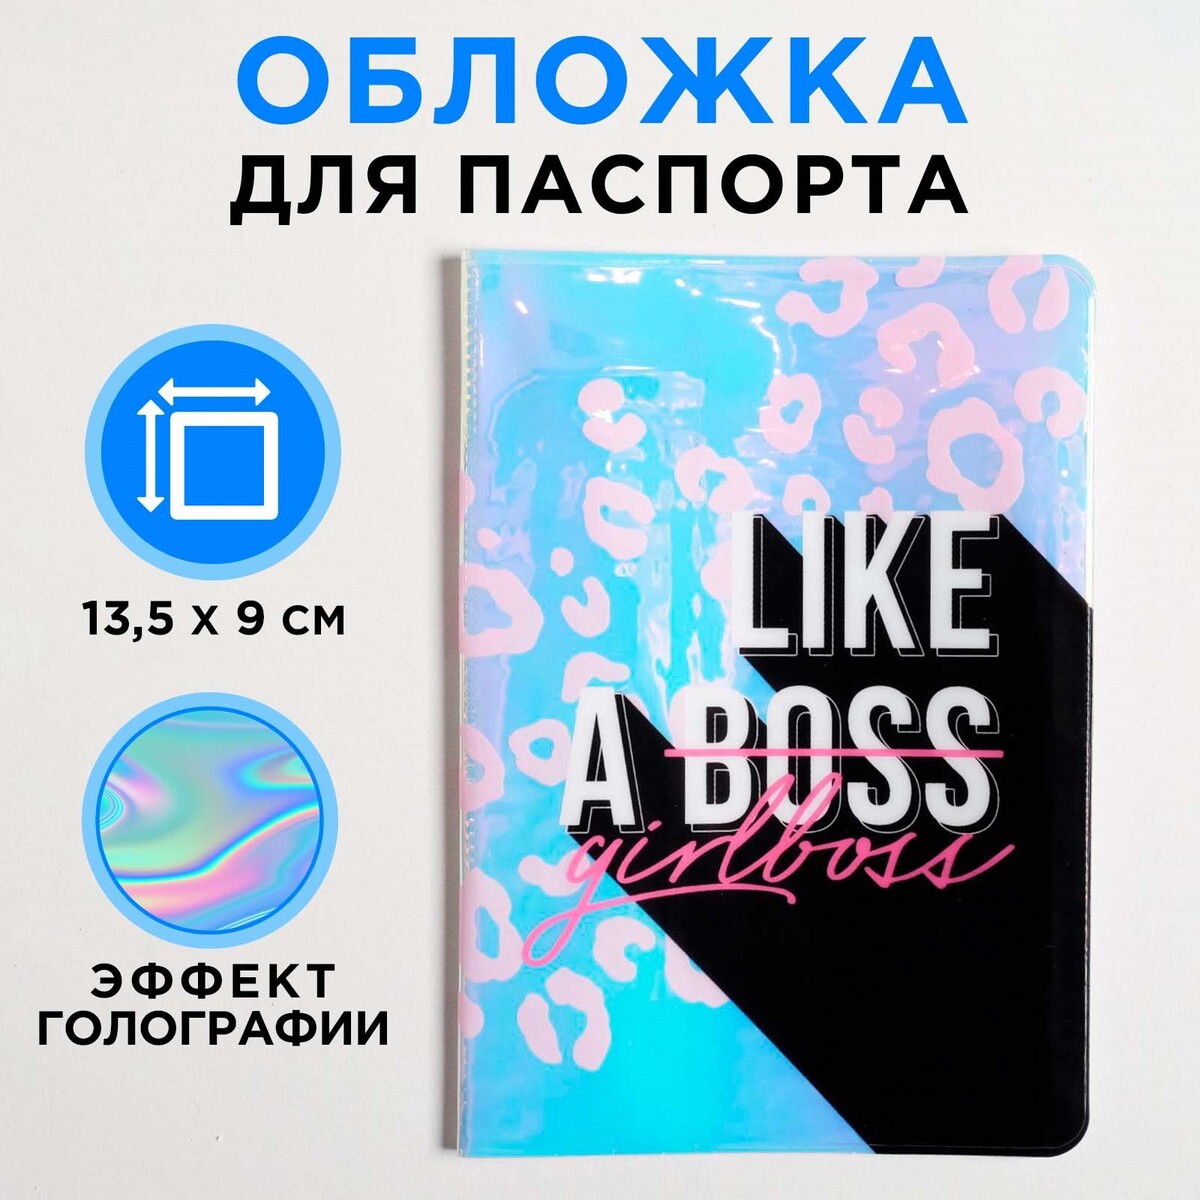 Голографичная паспортная обложка like a girlboss No brand